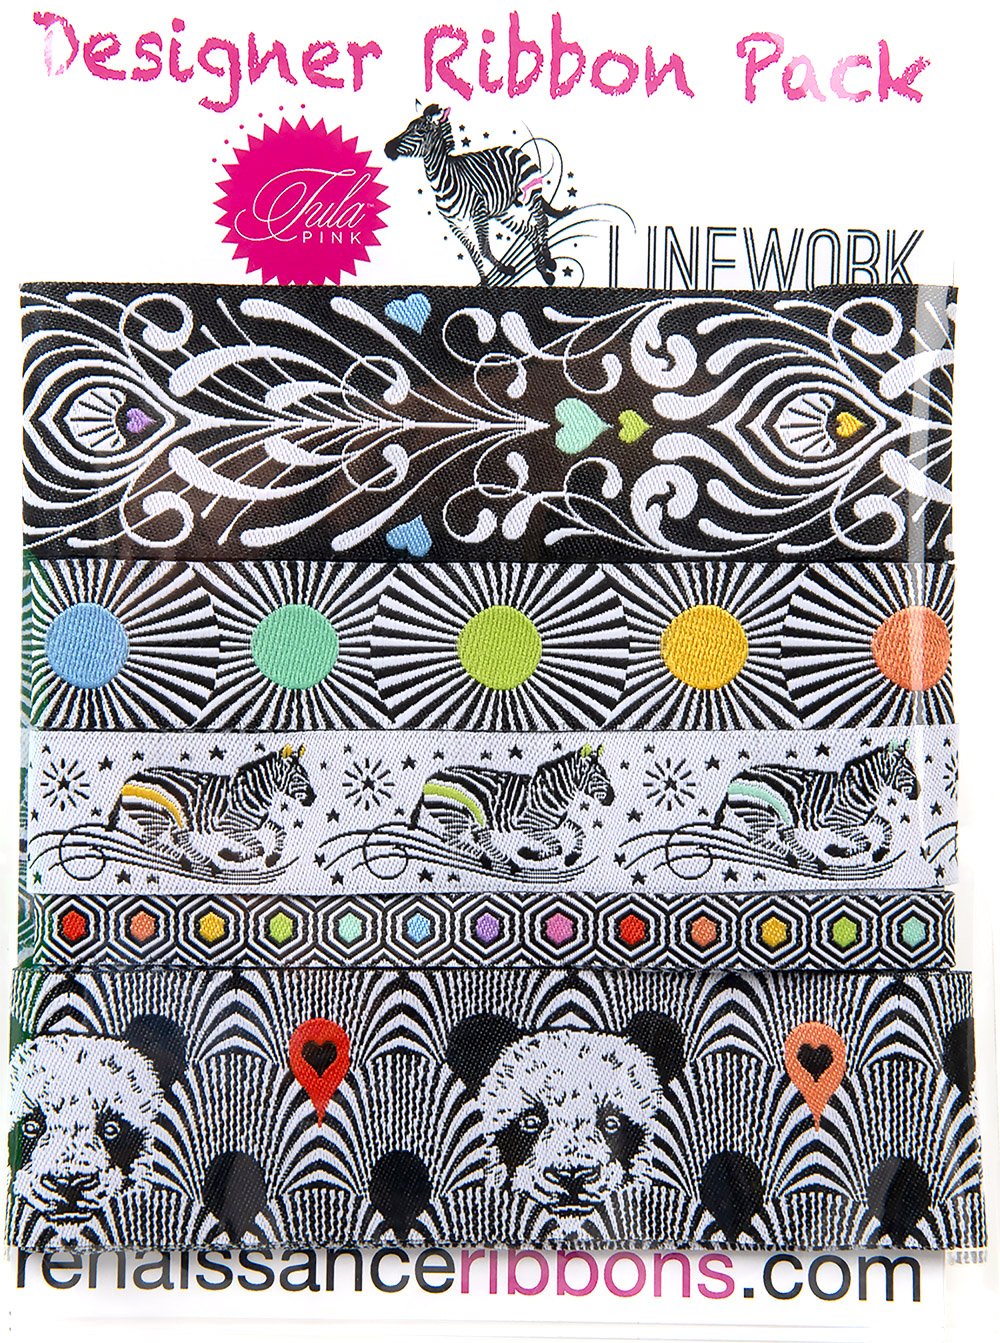 Renaissance Ribbons - Tula Pink Linework - Designer Ribbon Pack - DP-92Linework